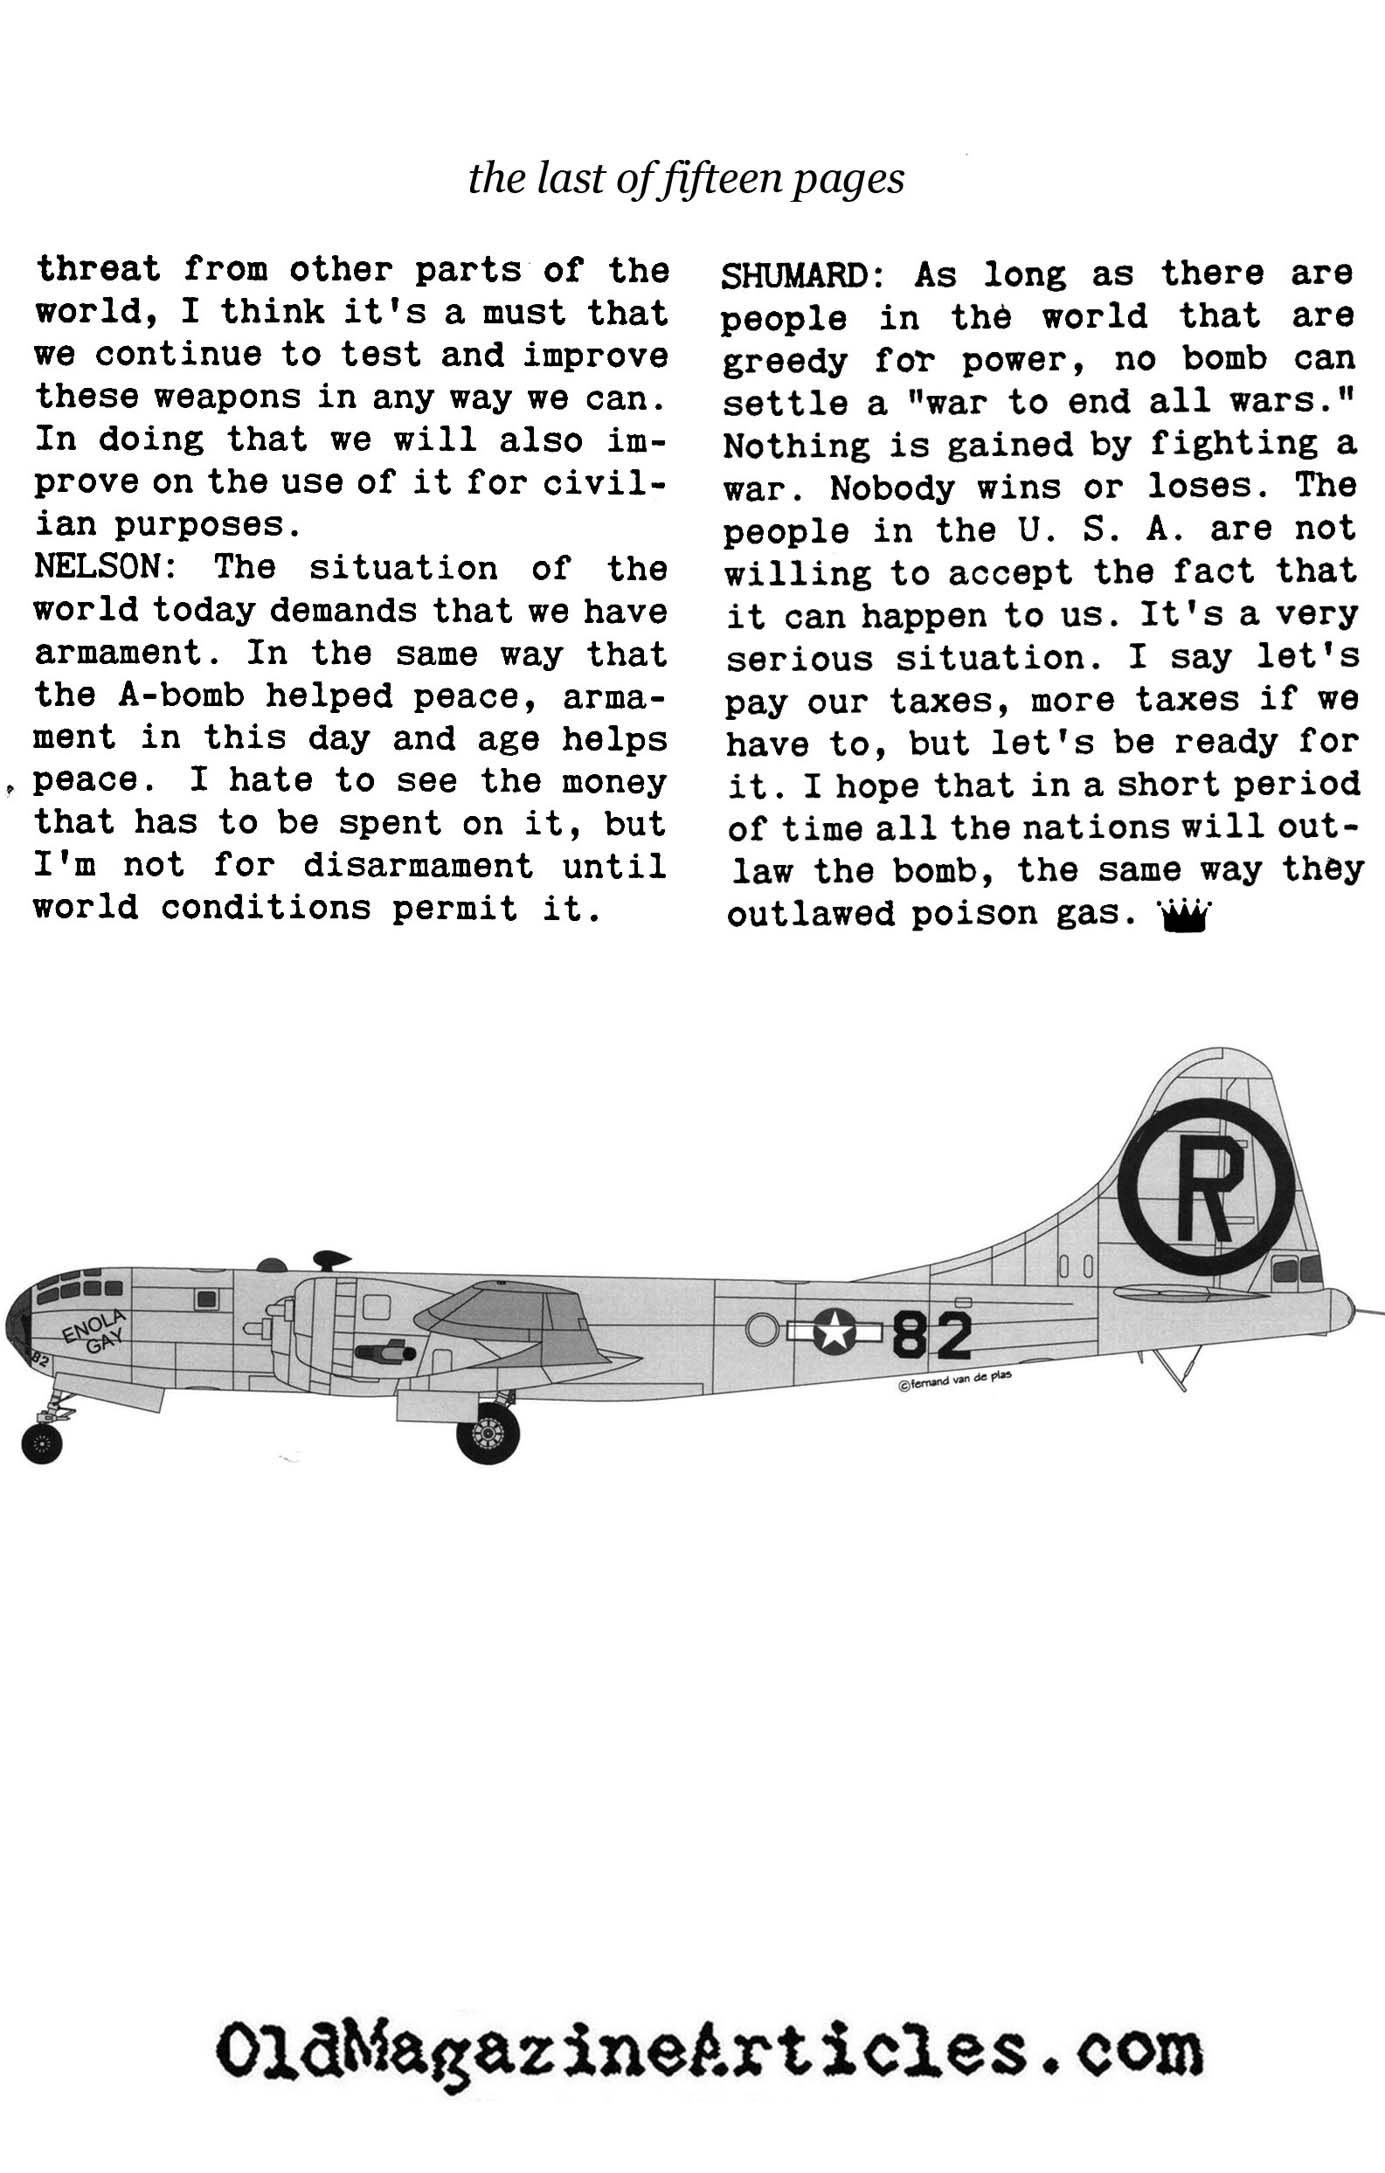 The Bombers Speak (Coronet Magazine, 1960)